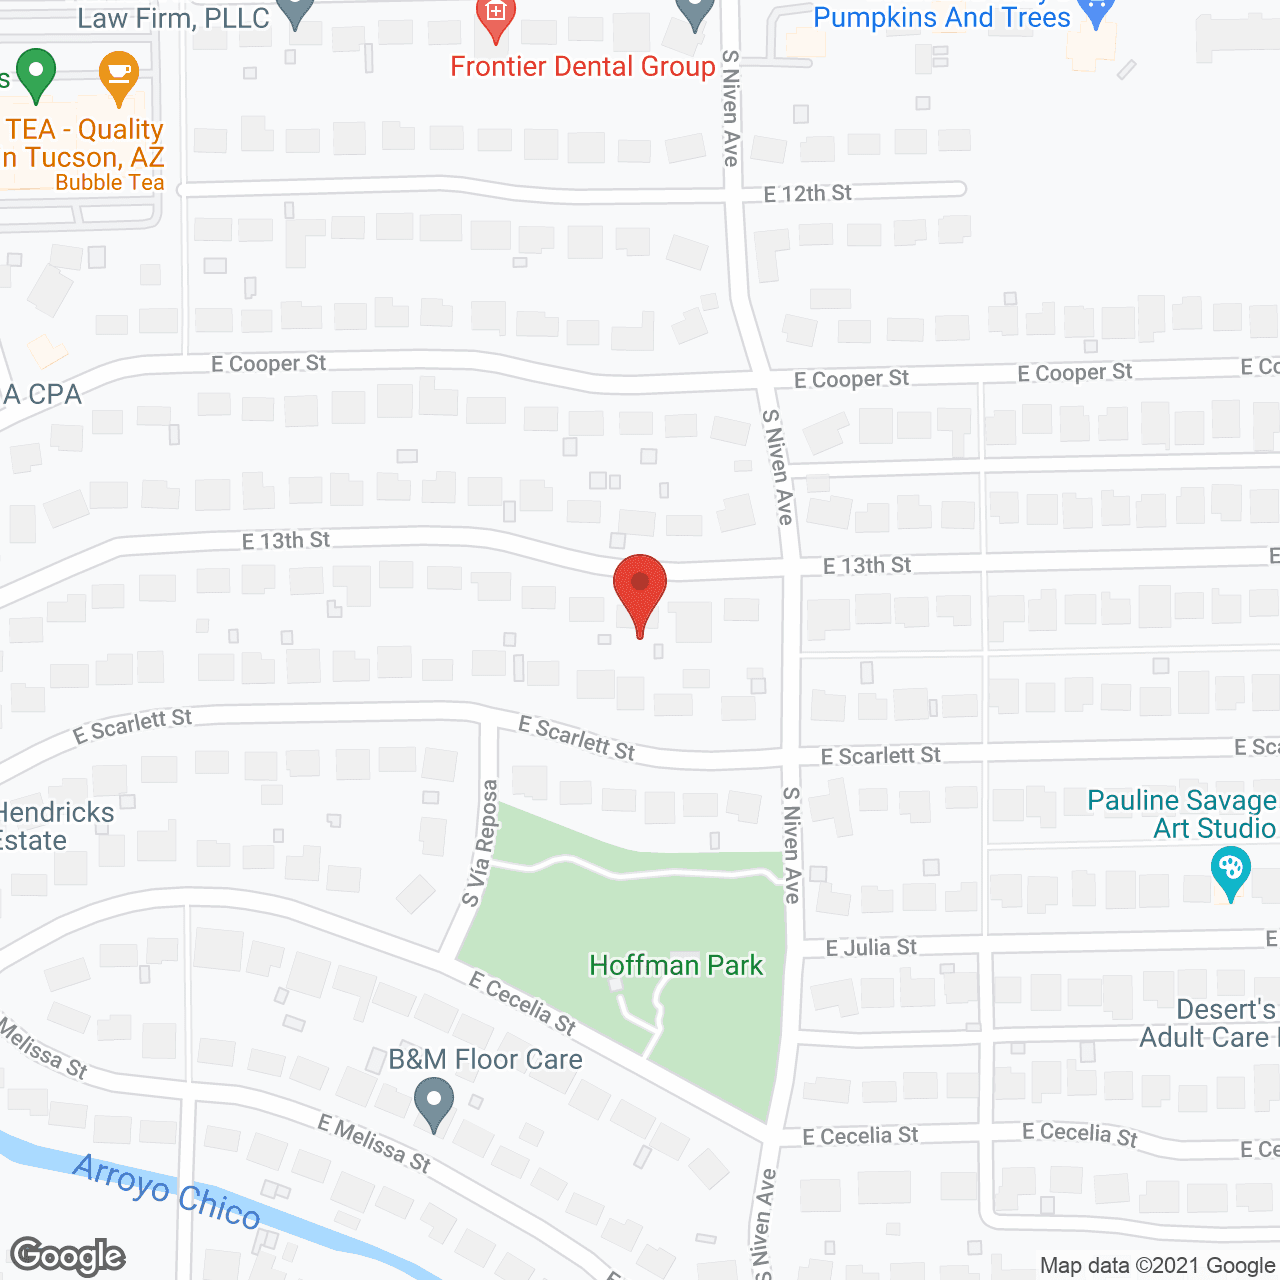 AccentCare of Tucson, AZ in google map